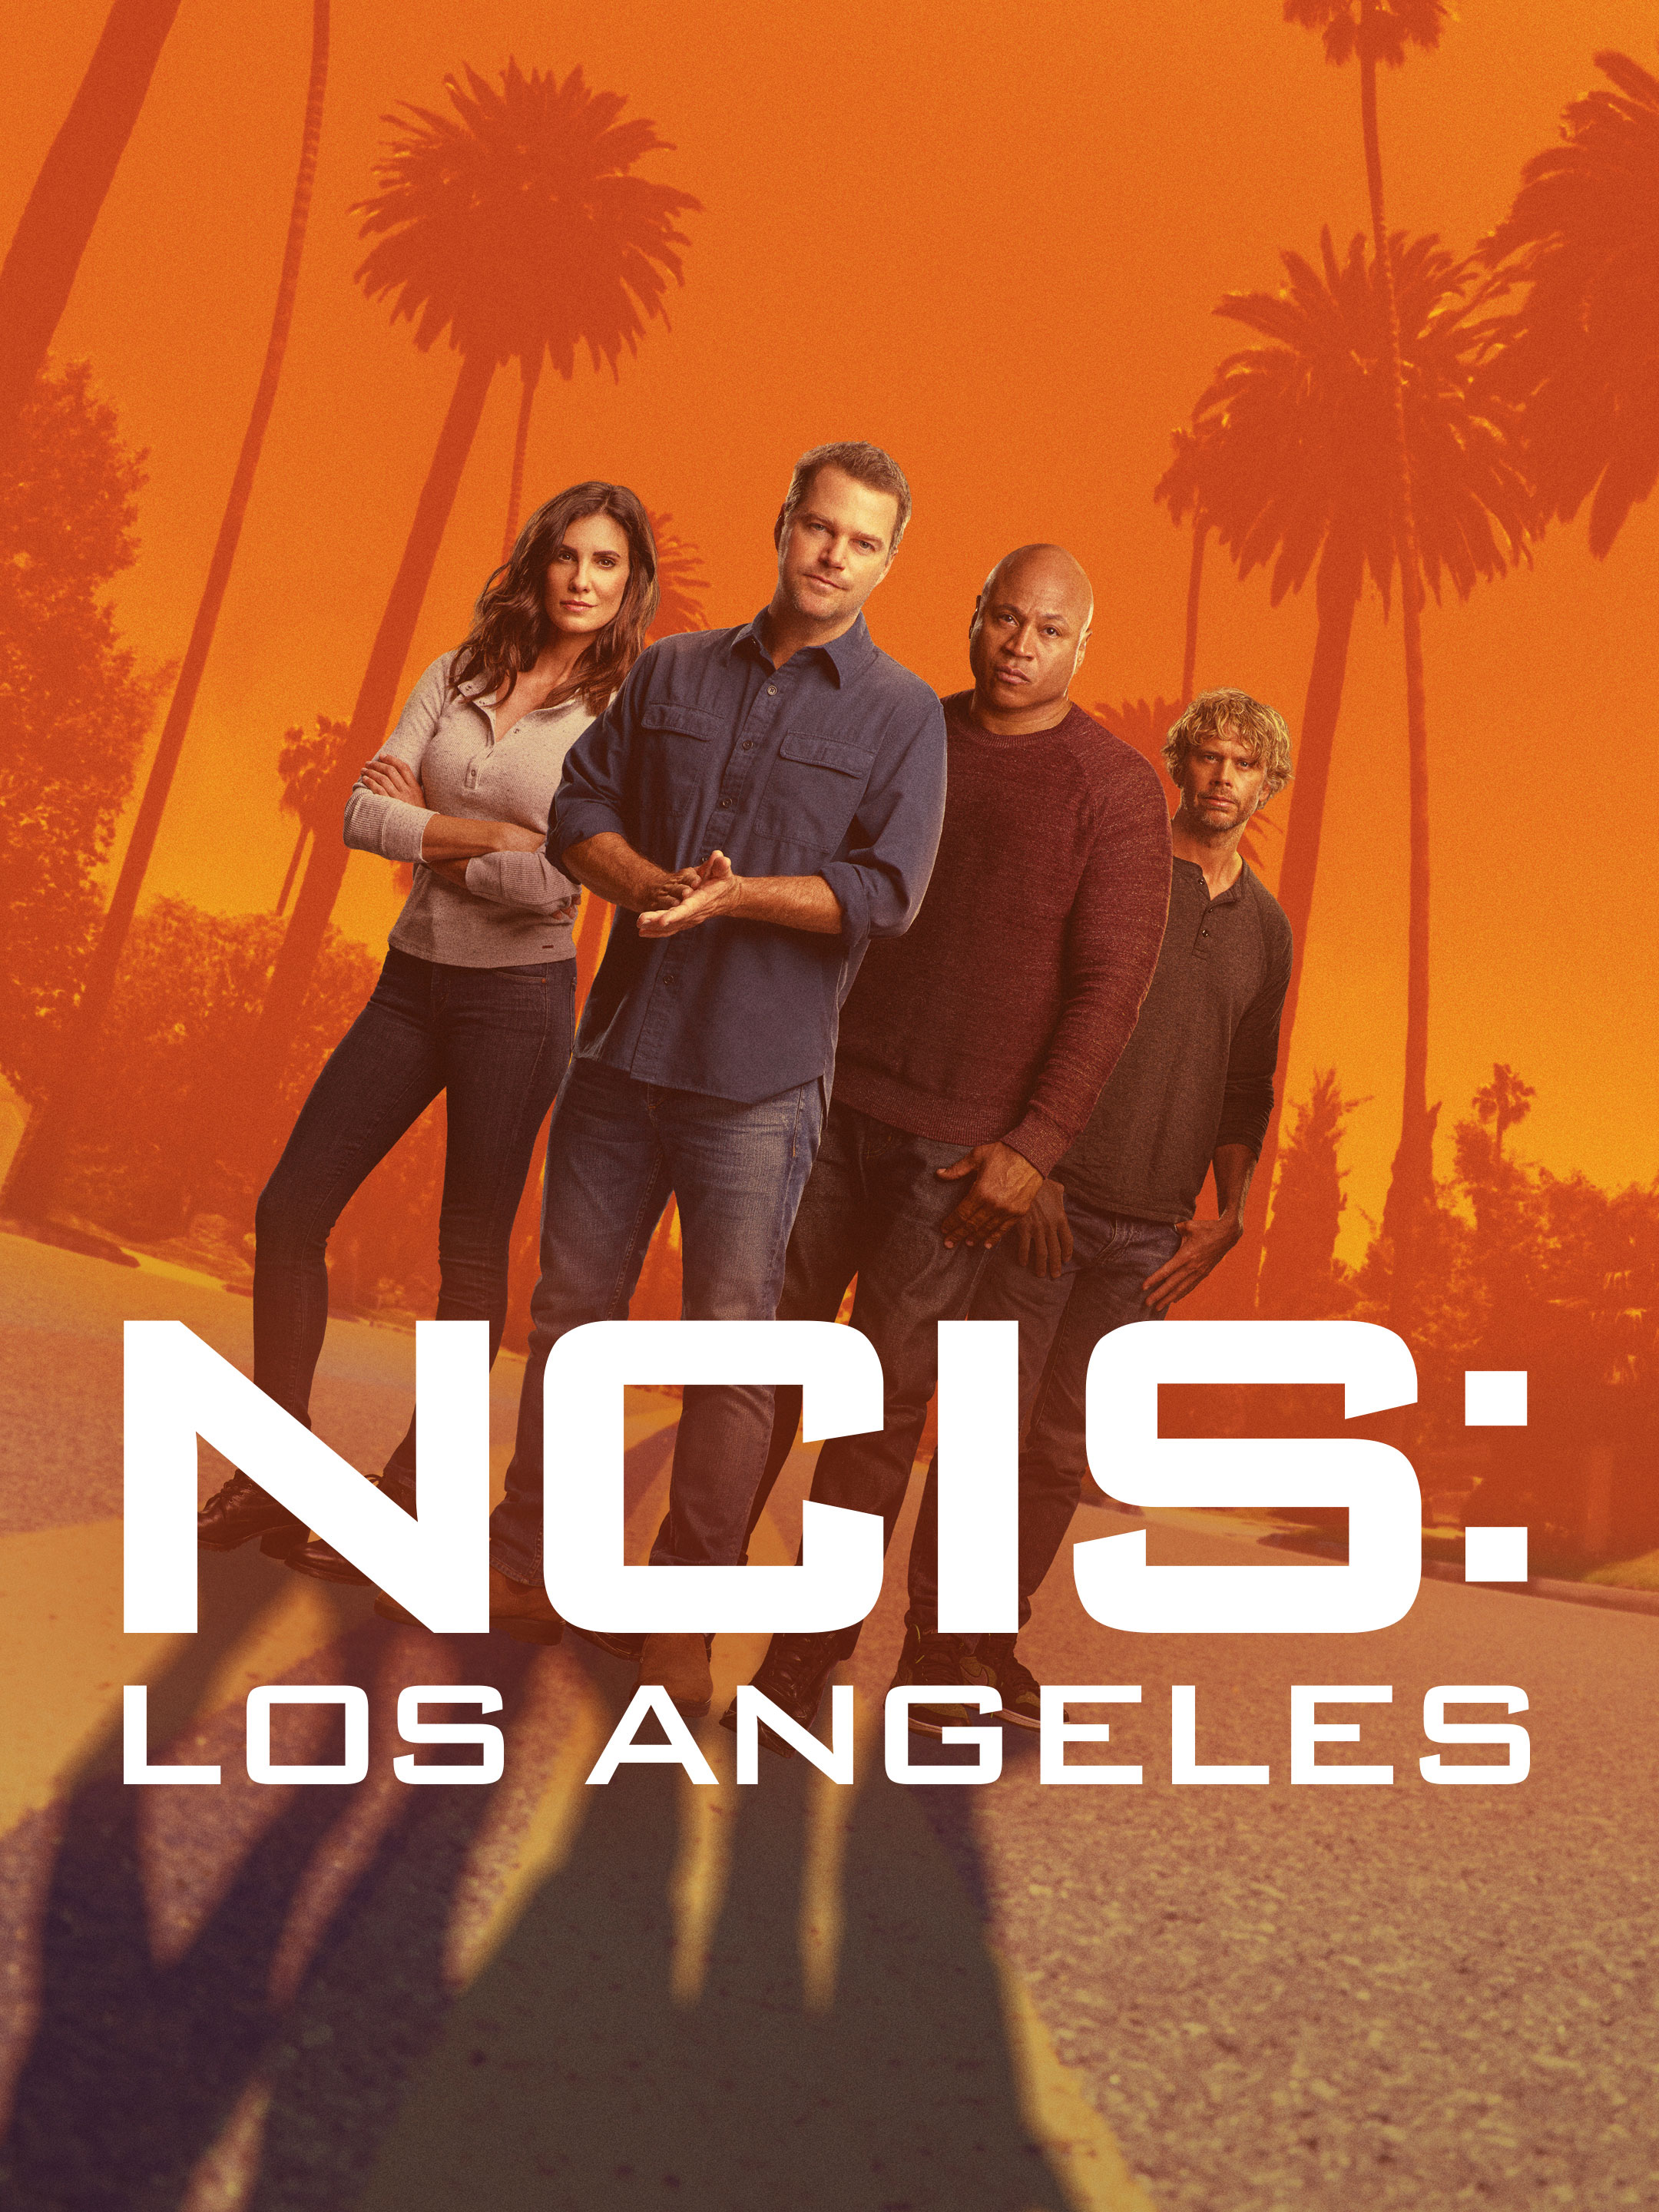 NCIS Los Angeles Full Cast & Crew TV Guide